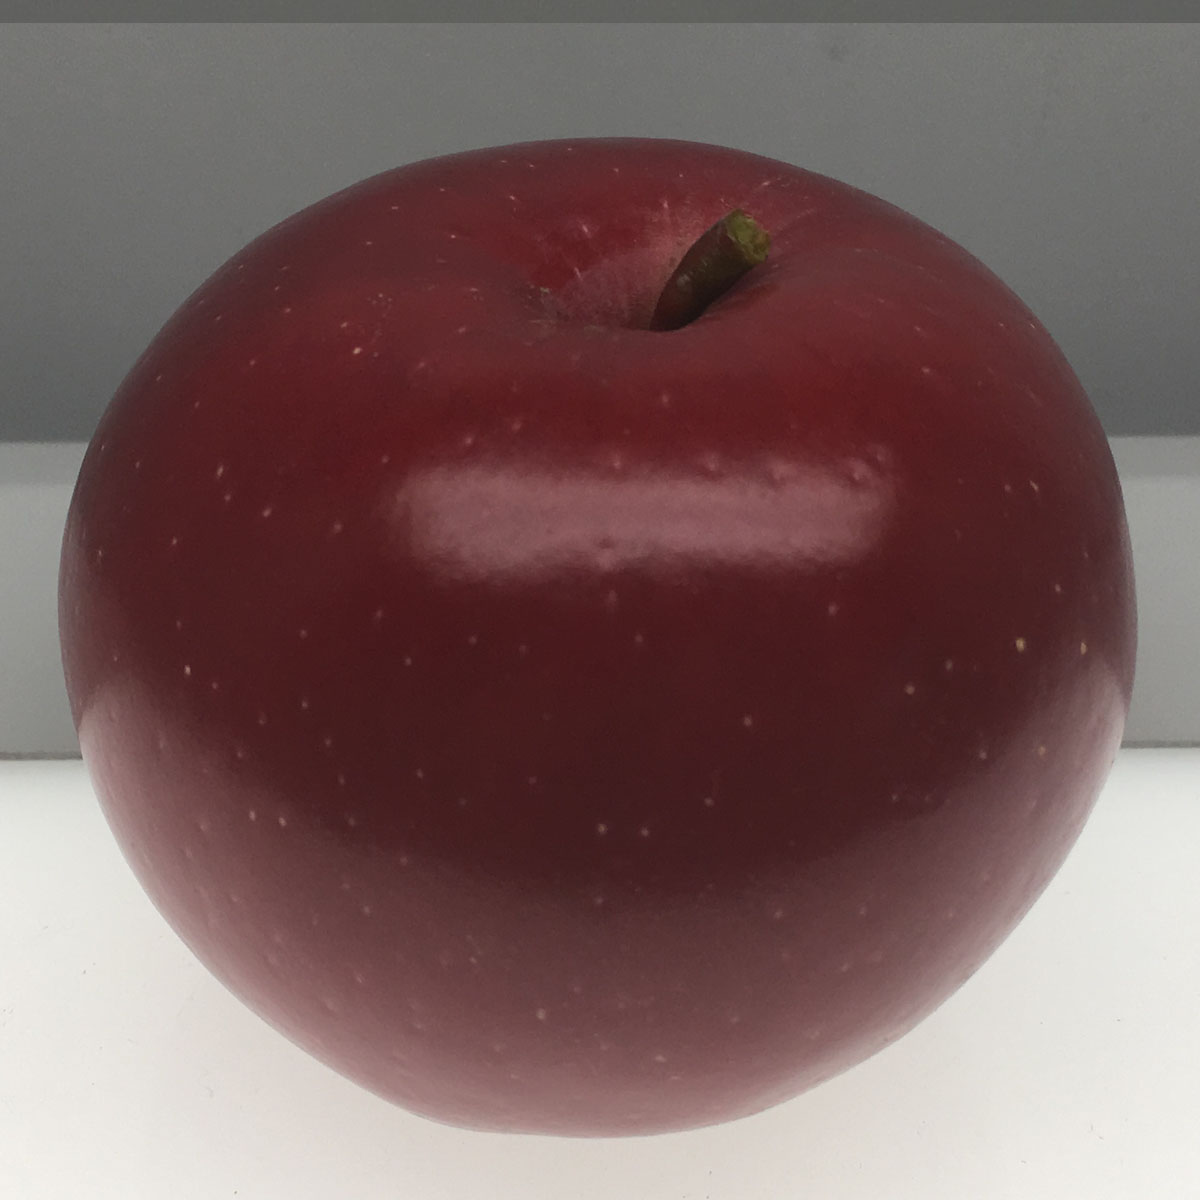 Burford's Red Flesh apple